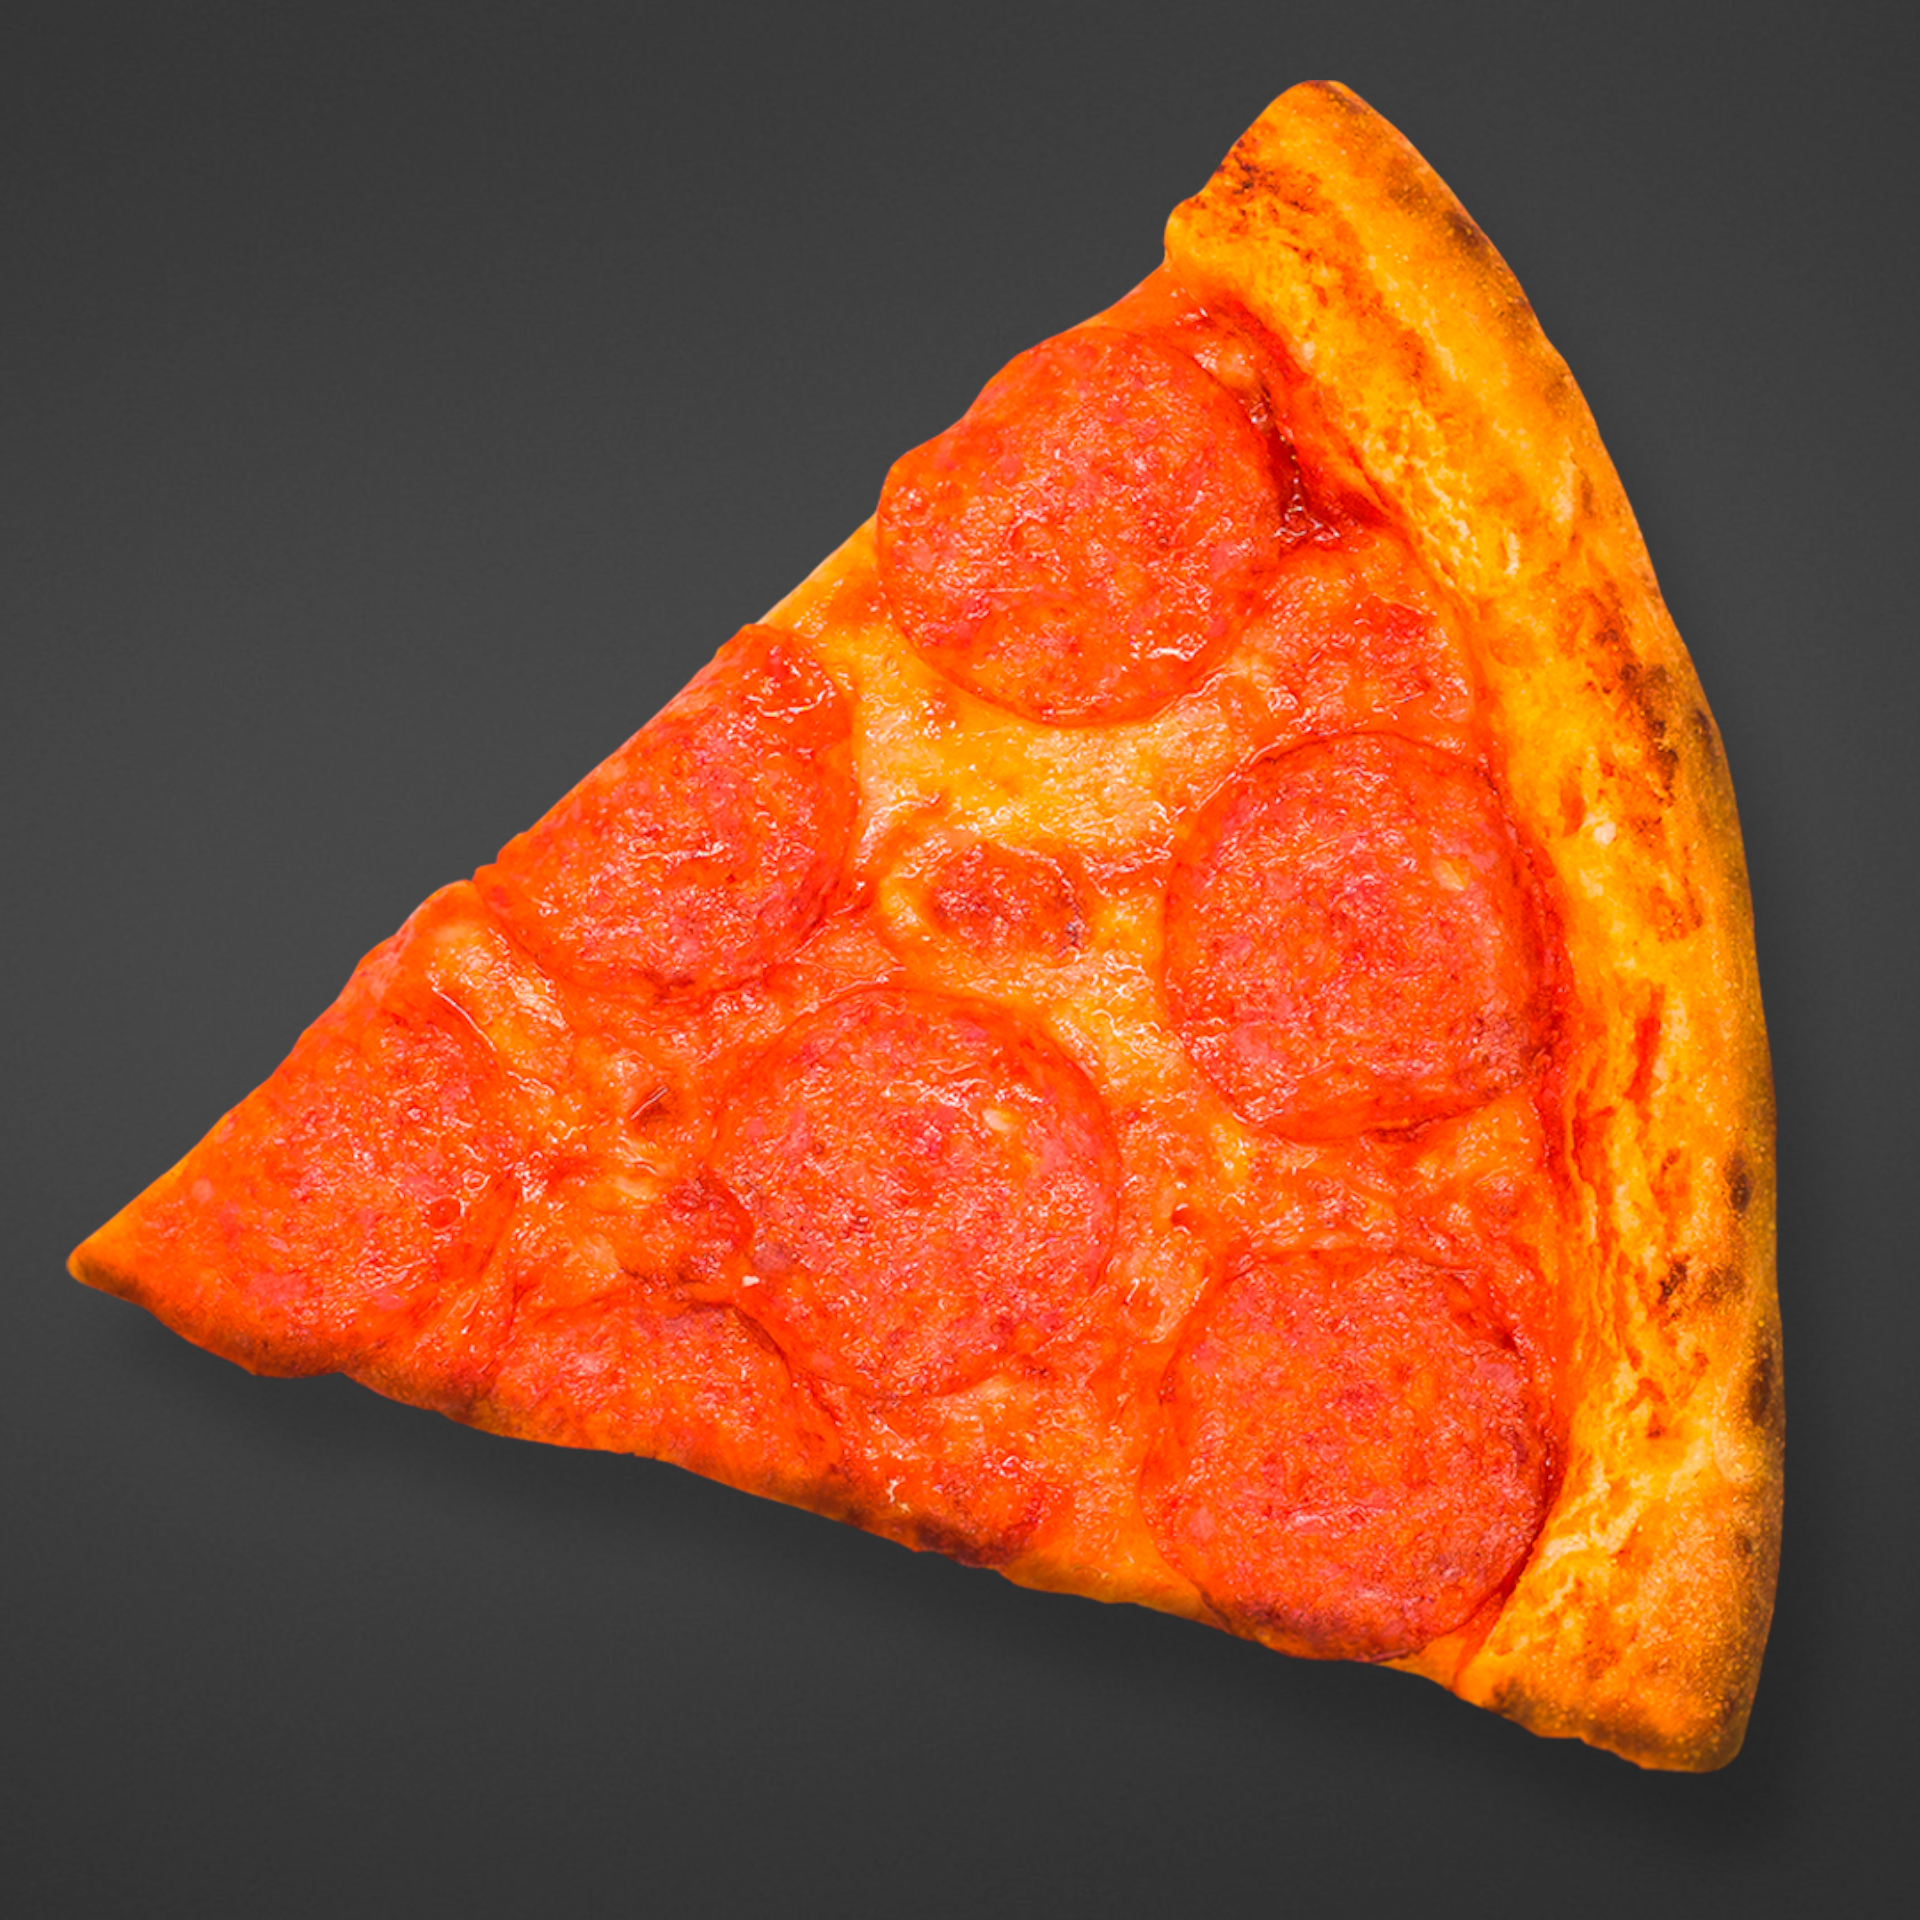 сколько стоит пицца пепперони в новосибирске фото 95